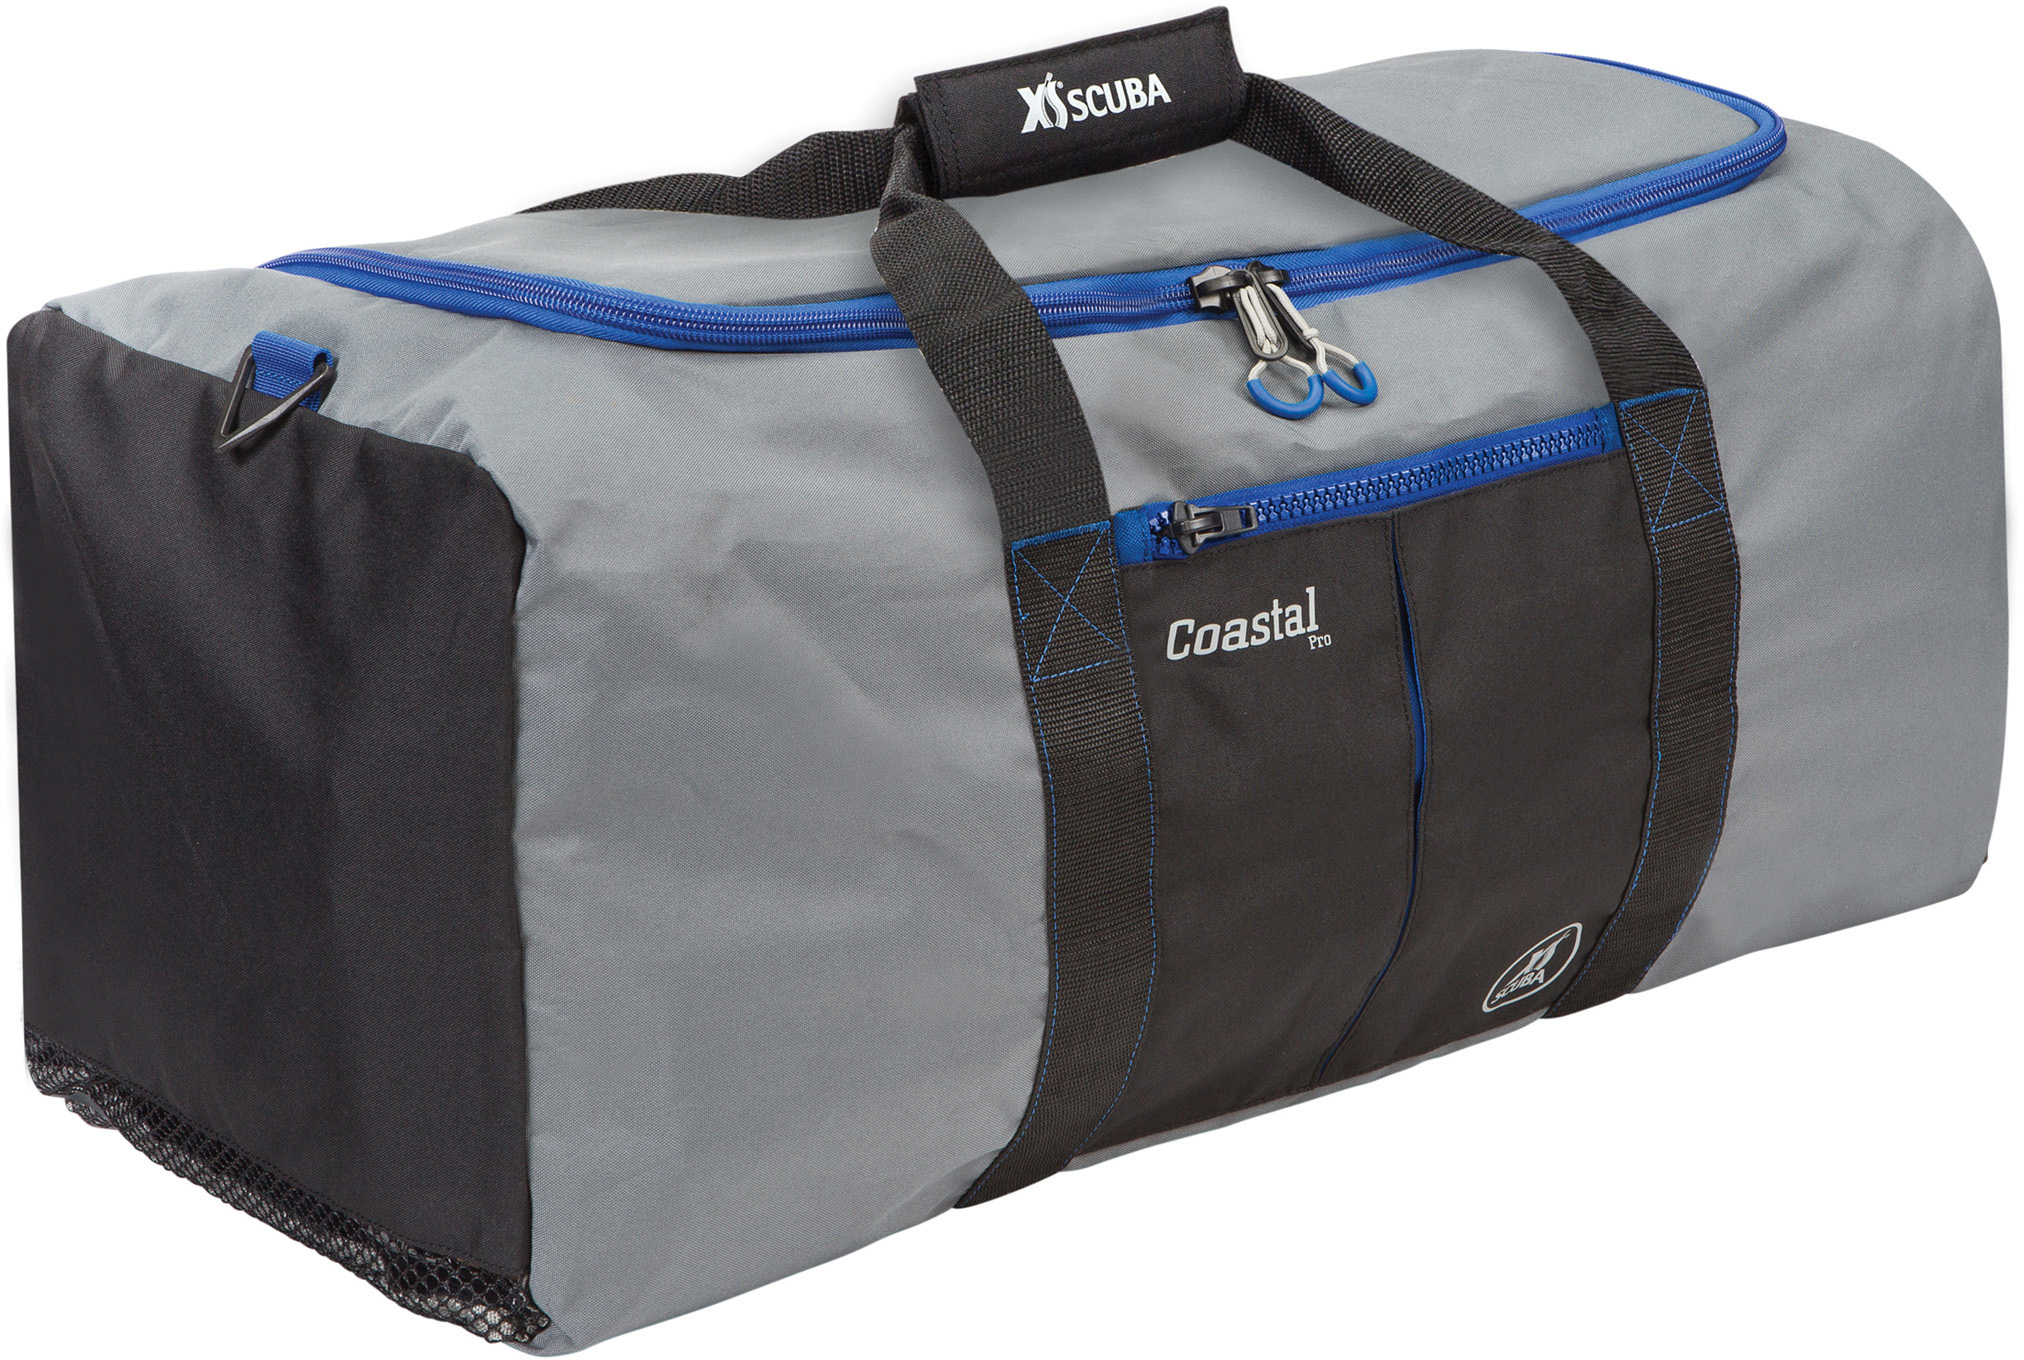 XS Scuba Coastal Pro Duffel Bag